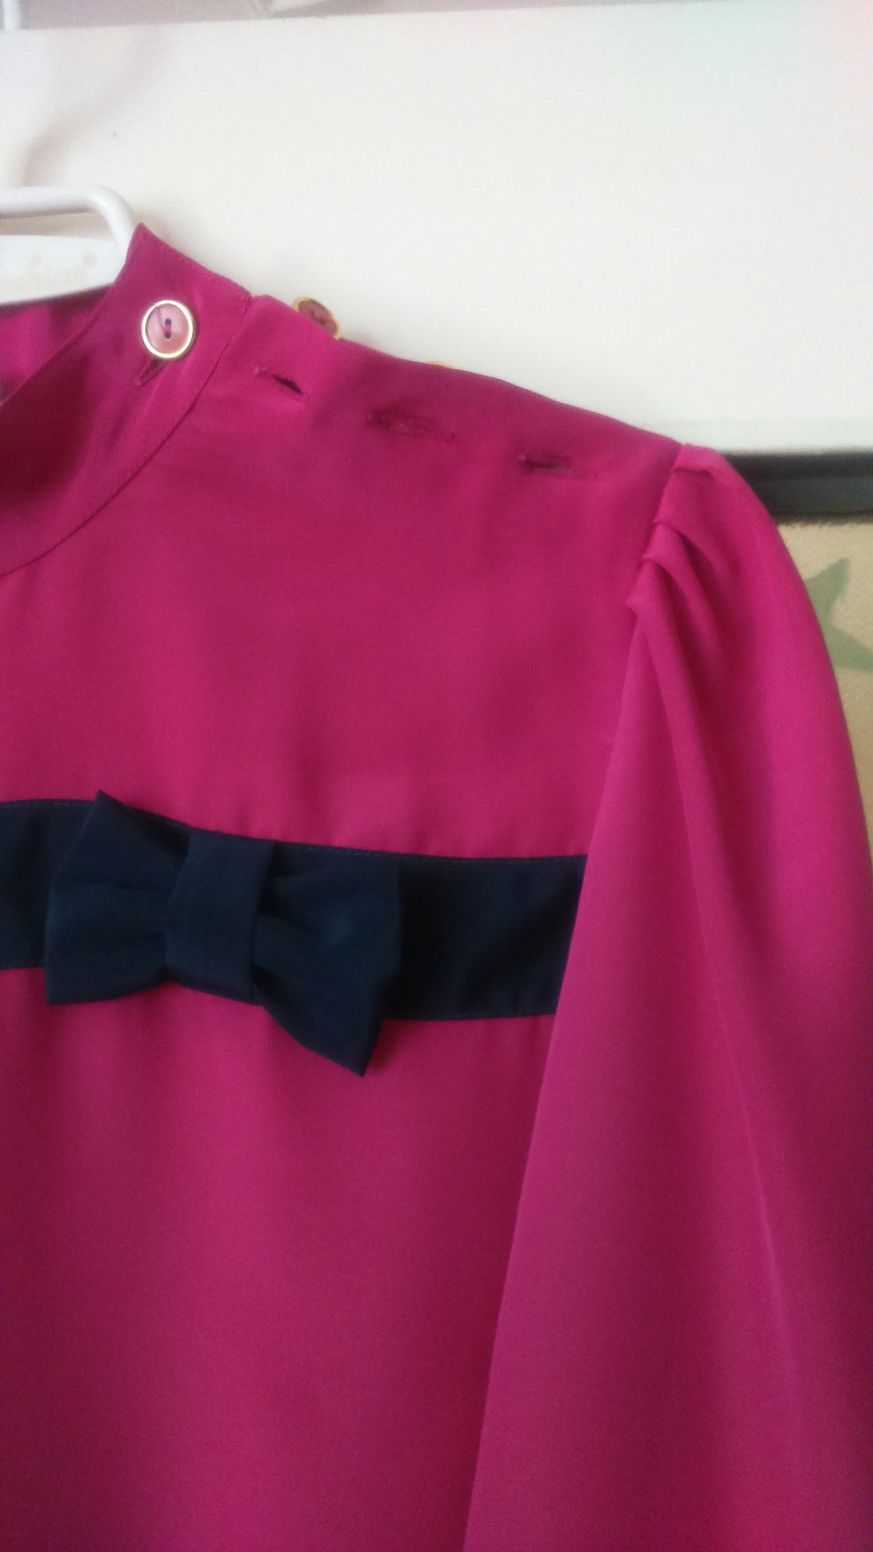 Koszula z bufkami, koszulka różowa, neon,pin-up,retro, kokardka, NOWA